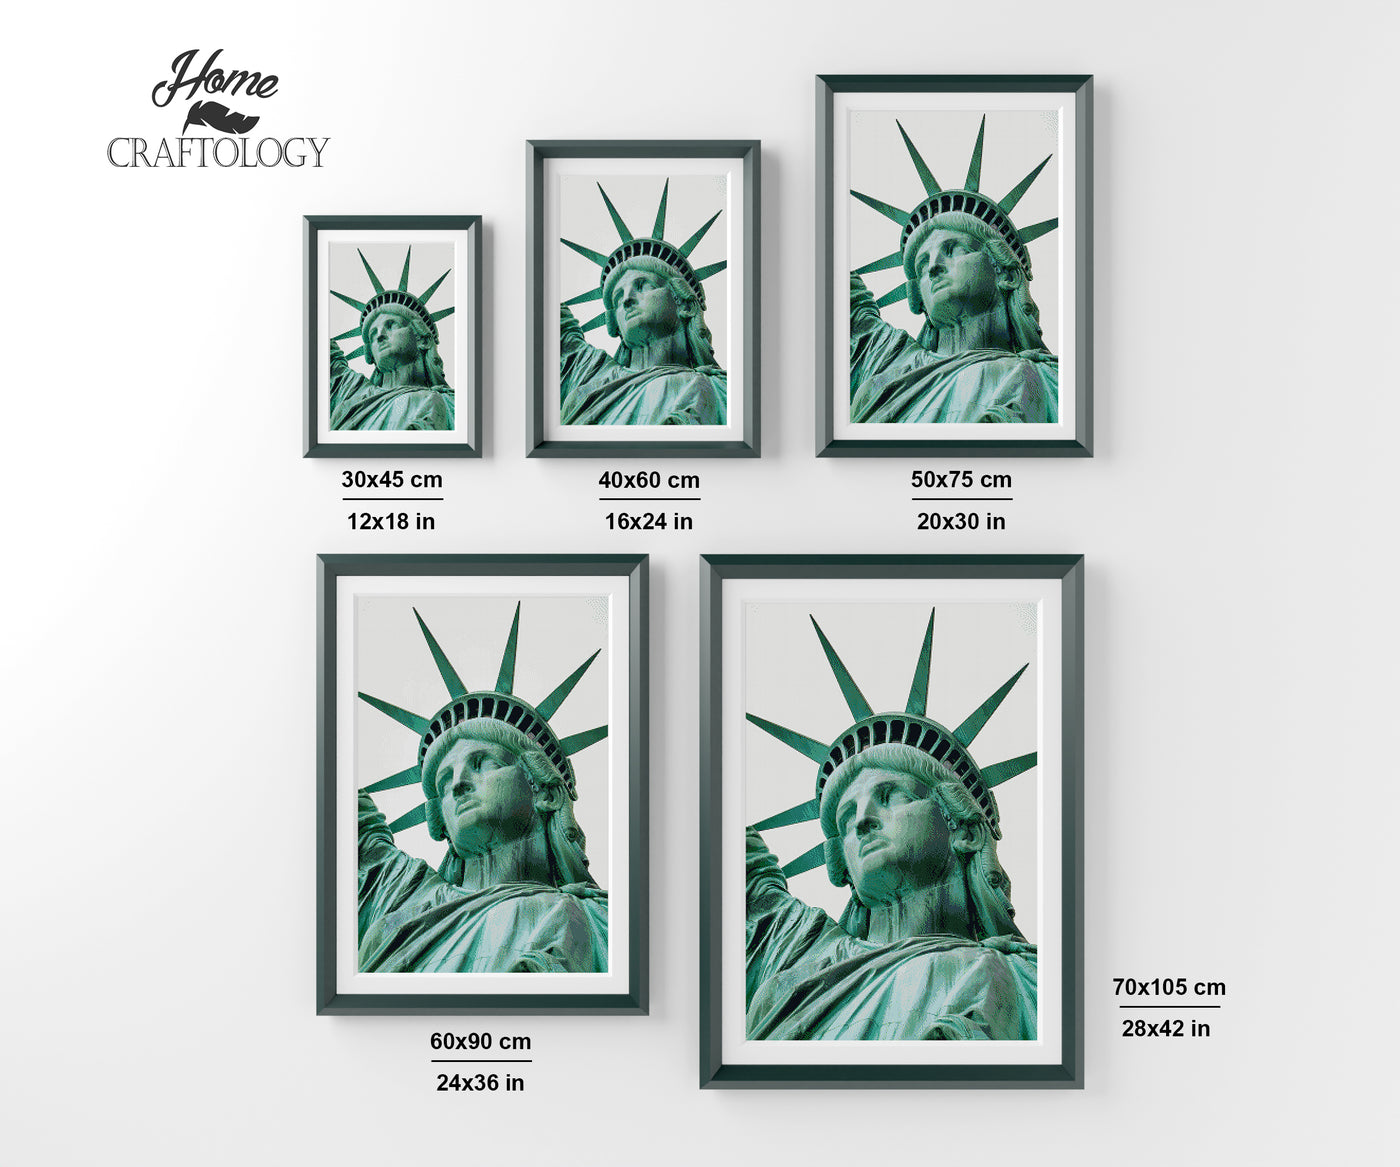 Close-up Statue of Liberty - Premium Diamond Painting Kit